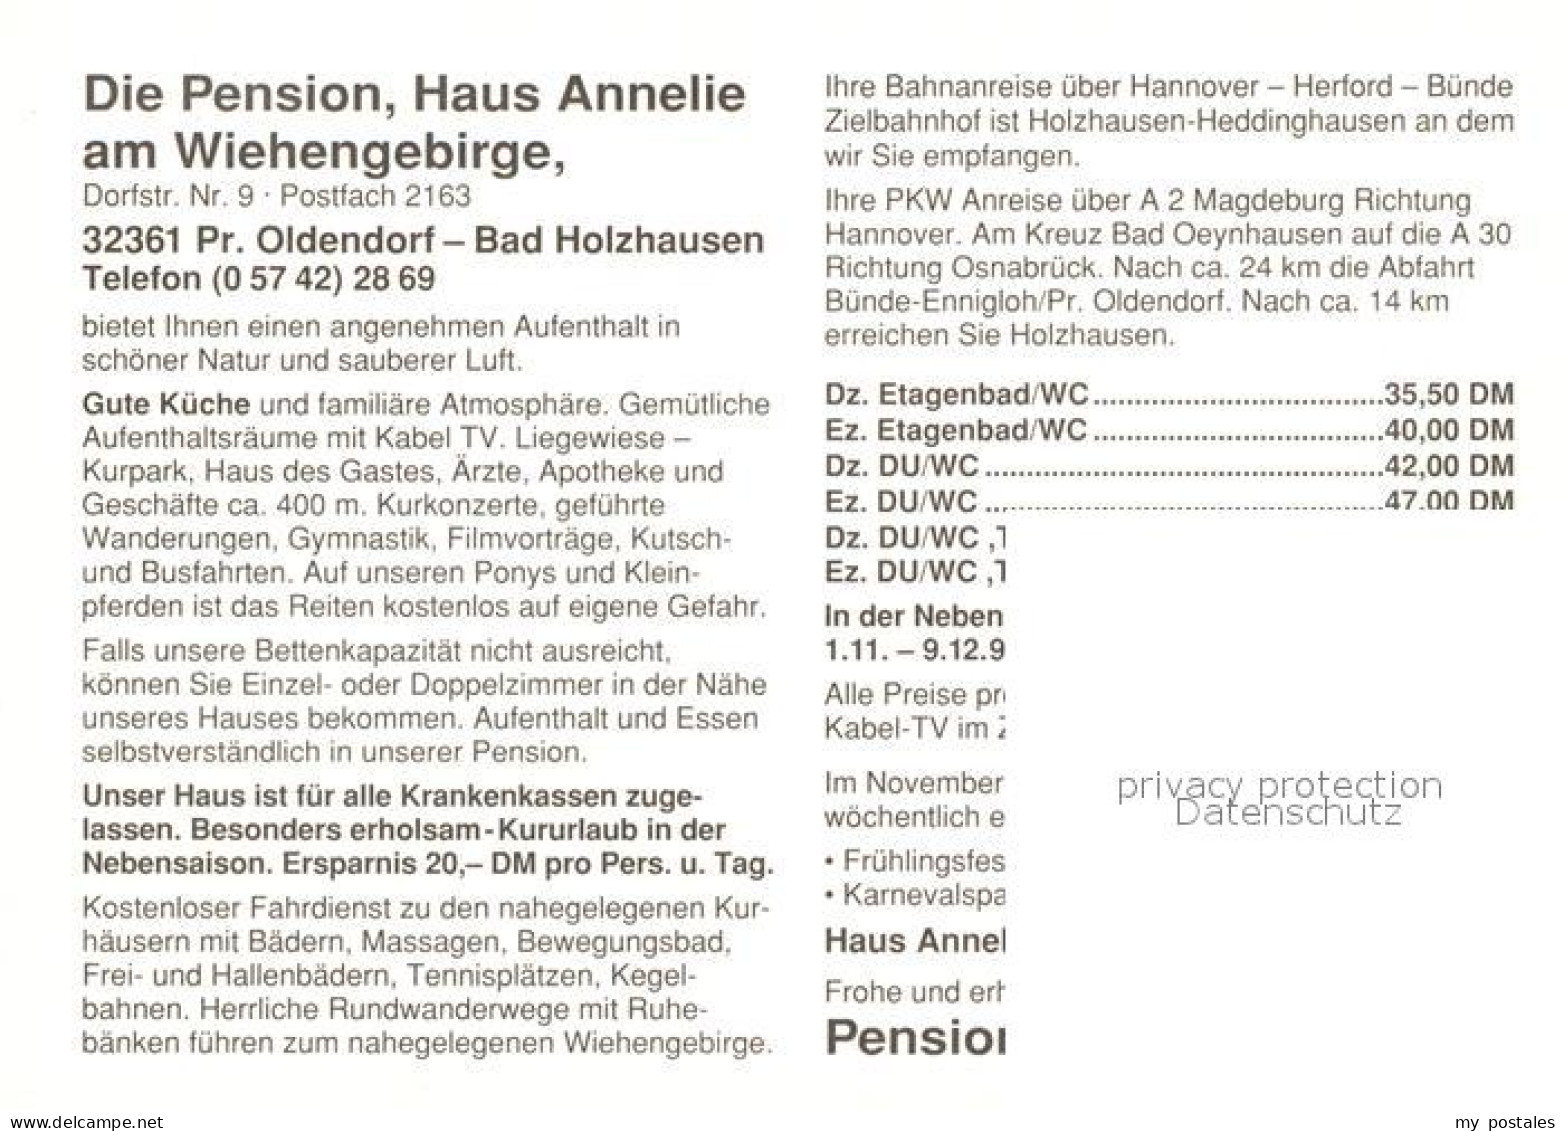 73124295 Preussisch Oldendorf Pension Haus Annelie  Boerninghausen - Getmold